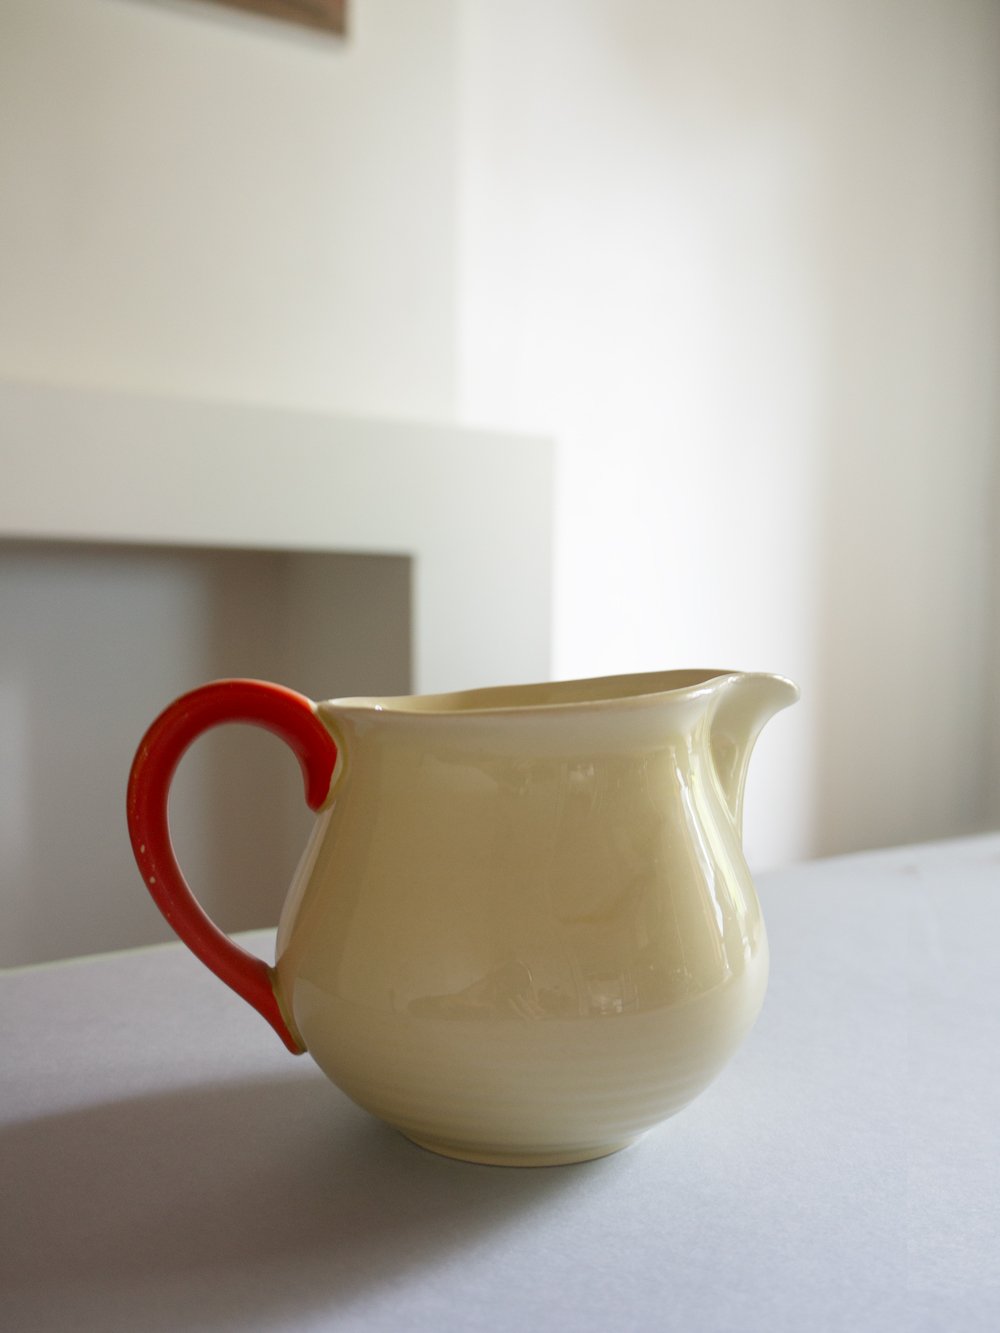 Image of cream pitcher